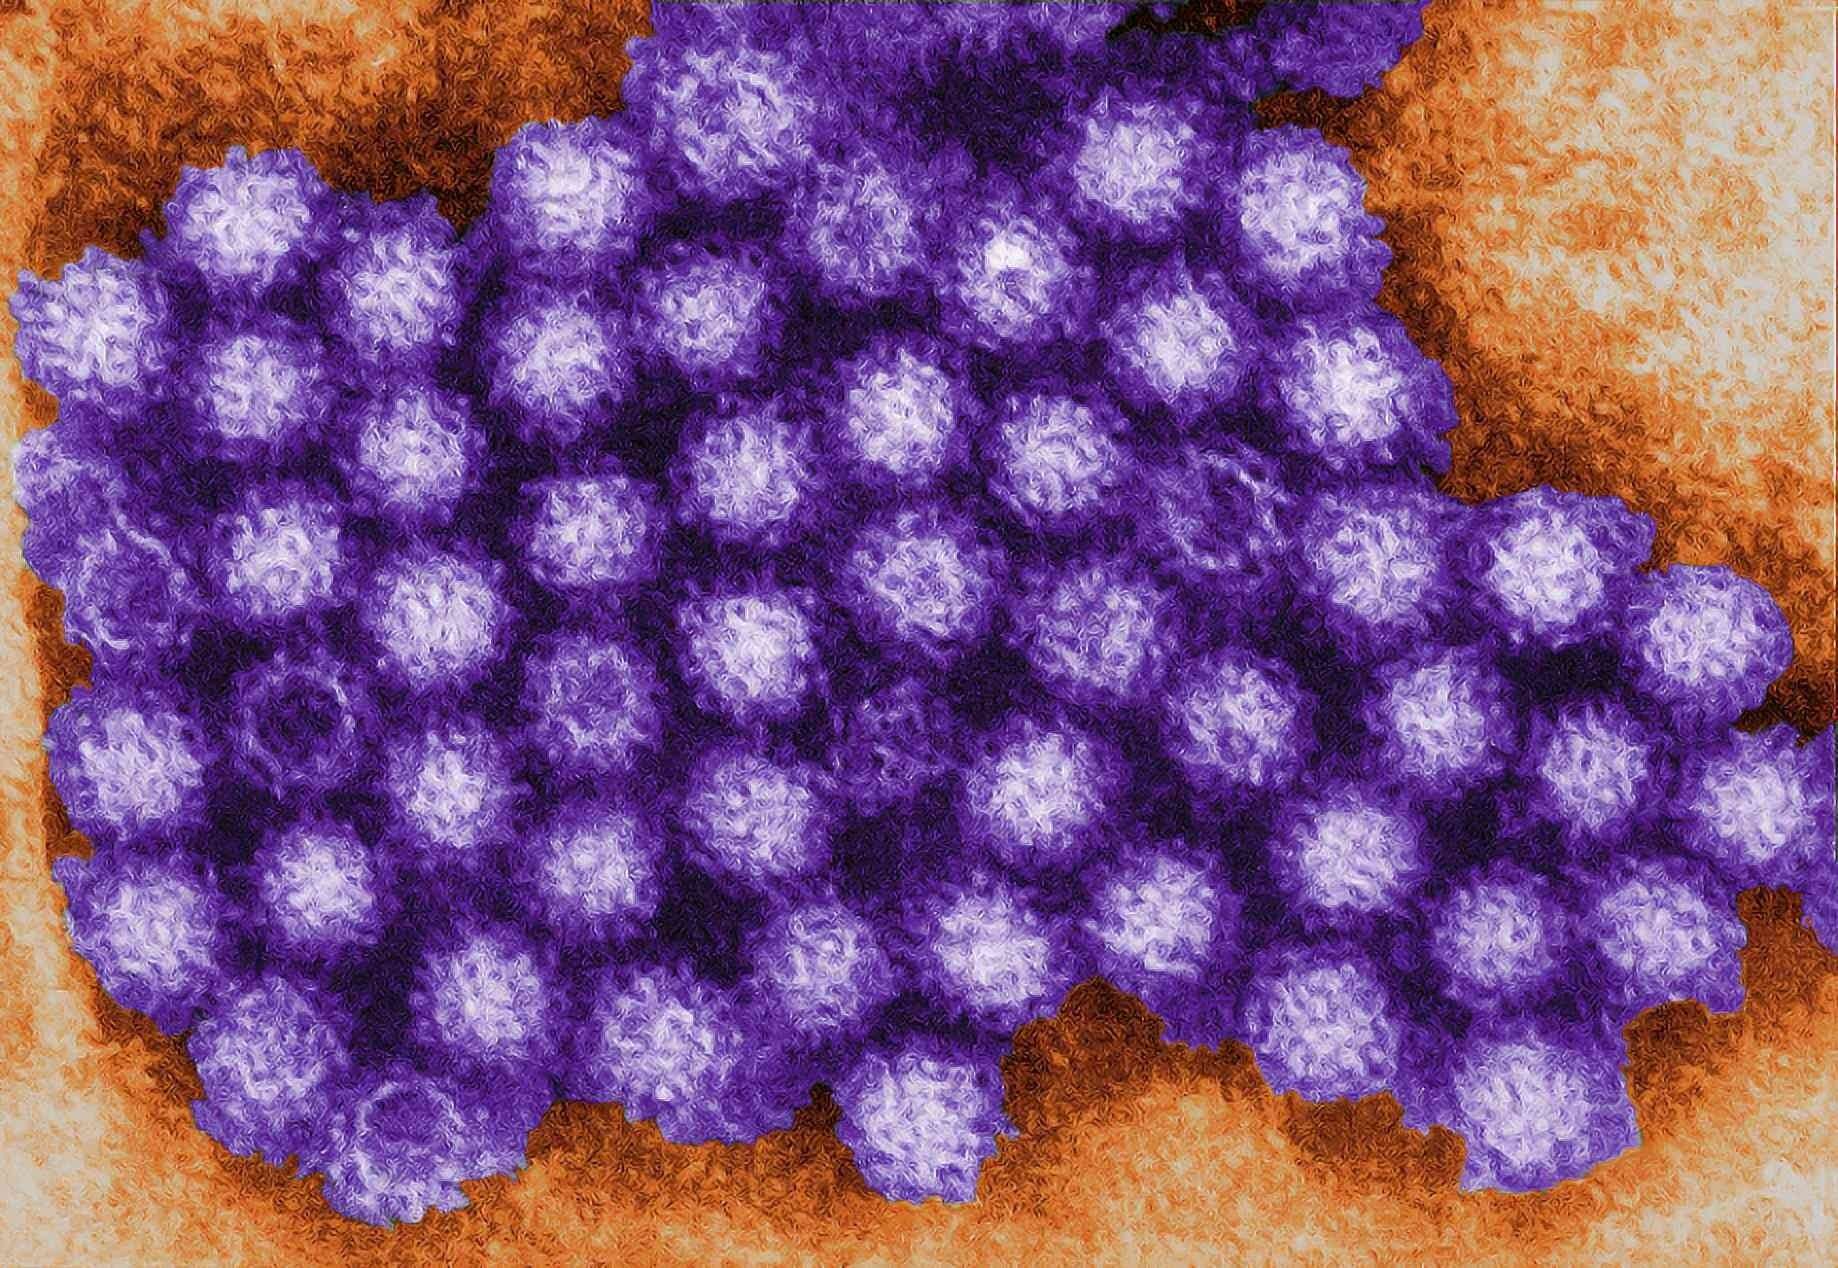 Norovirus can spread very quickly, necessitating a quarantine